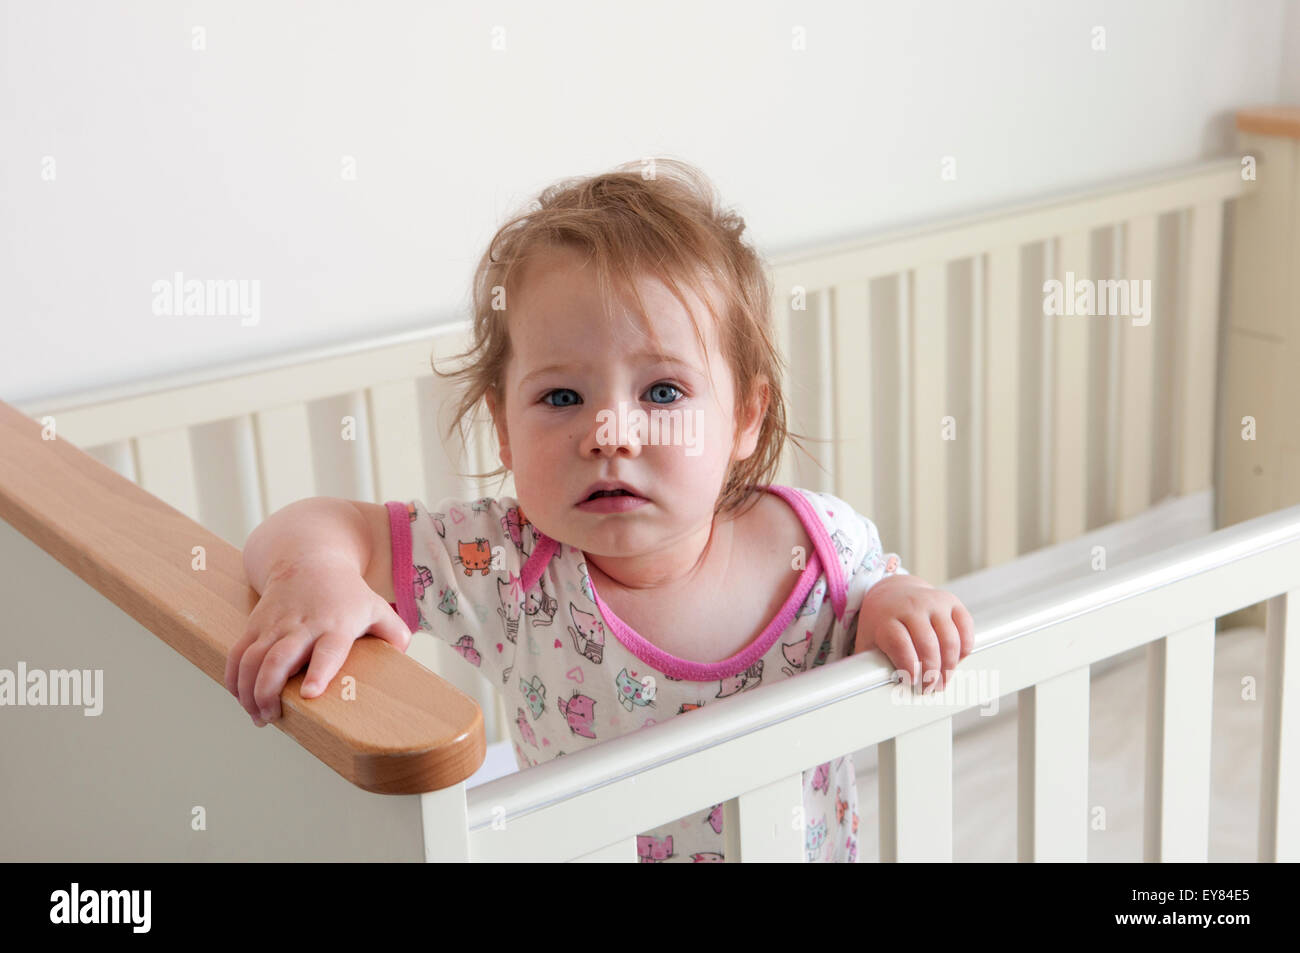 Baby girl standing inside her cot looking apprehensive Stock Photo